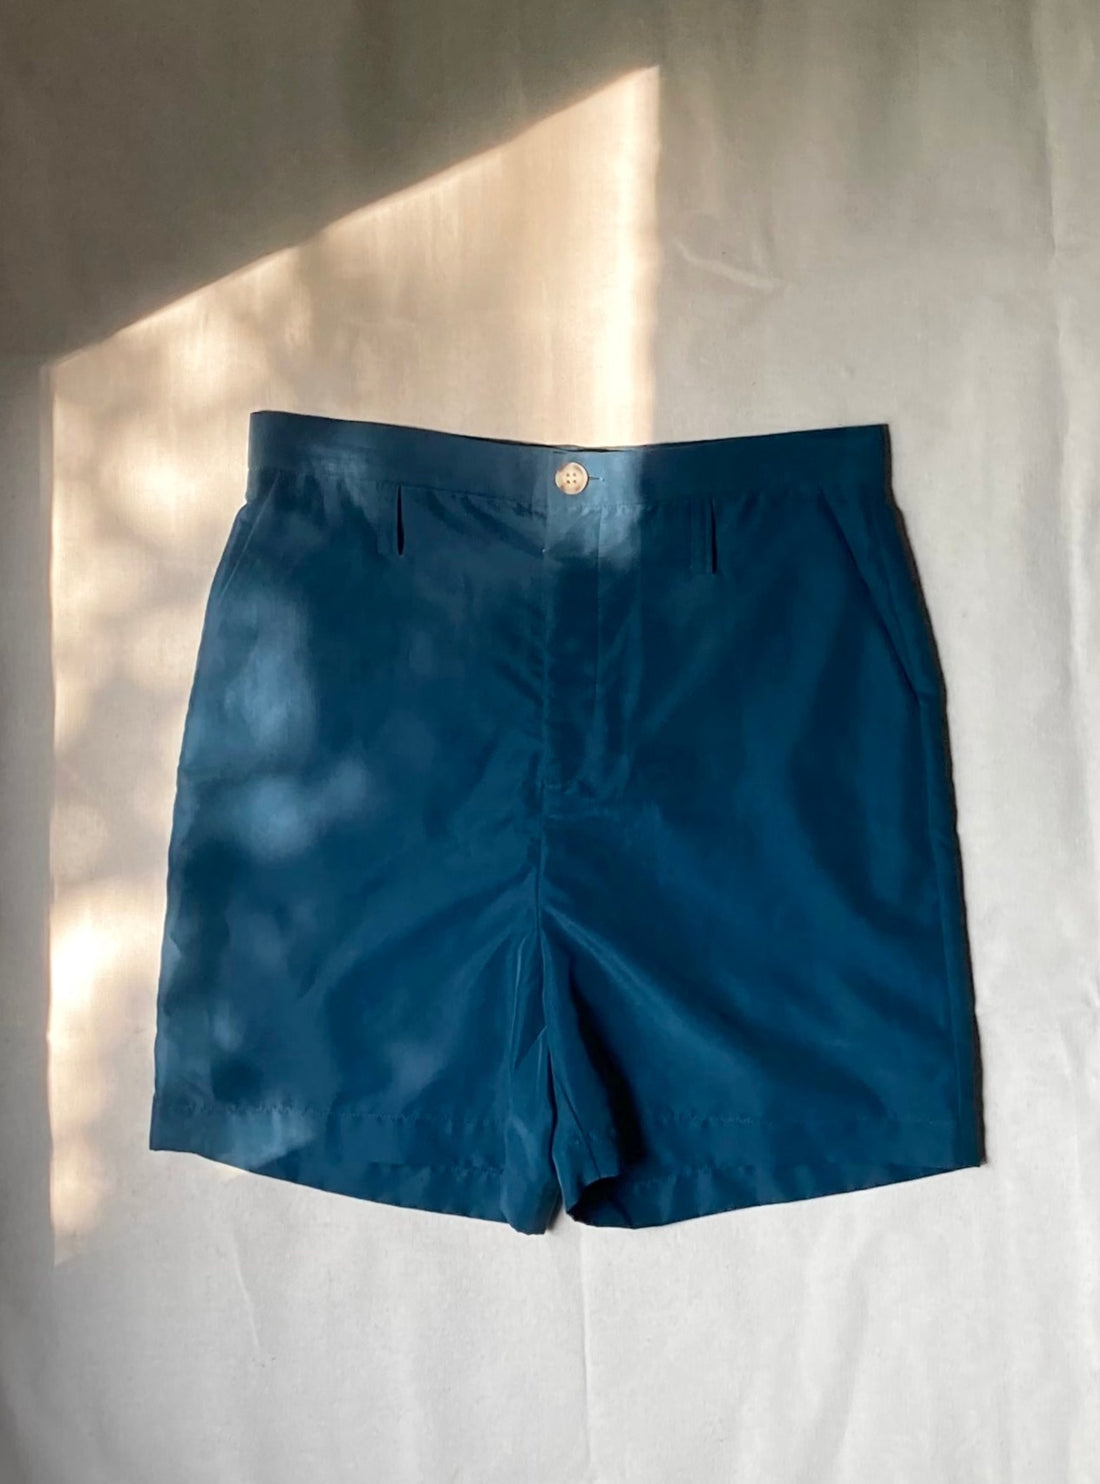 Shorts No1735w, sample emerald, size 25